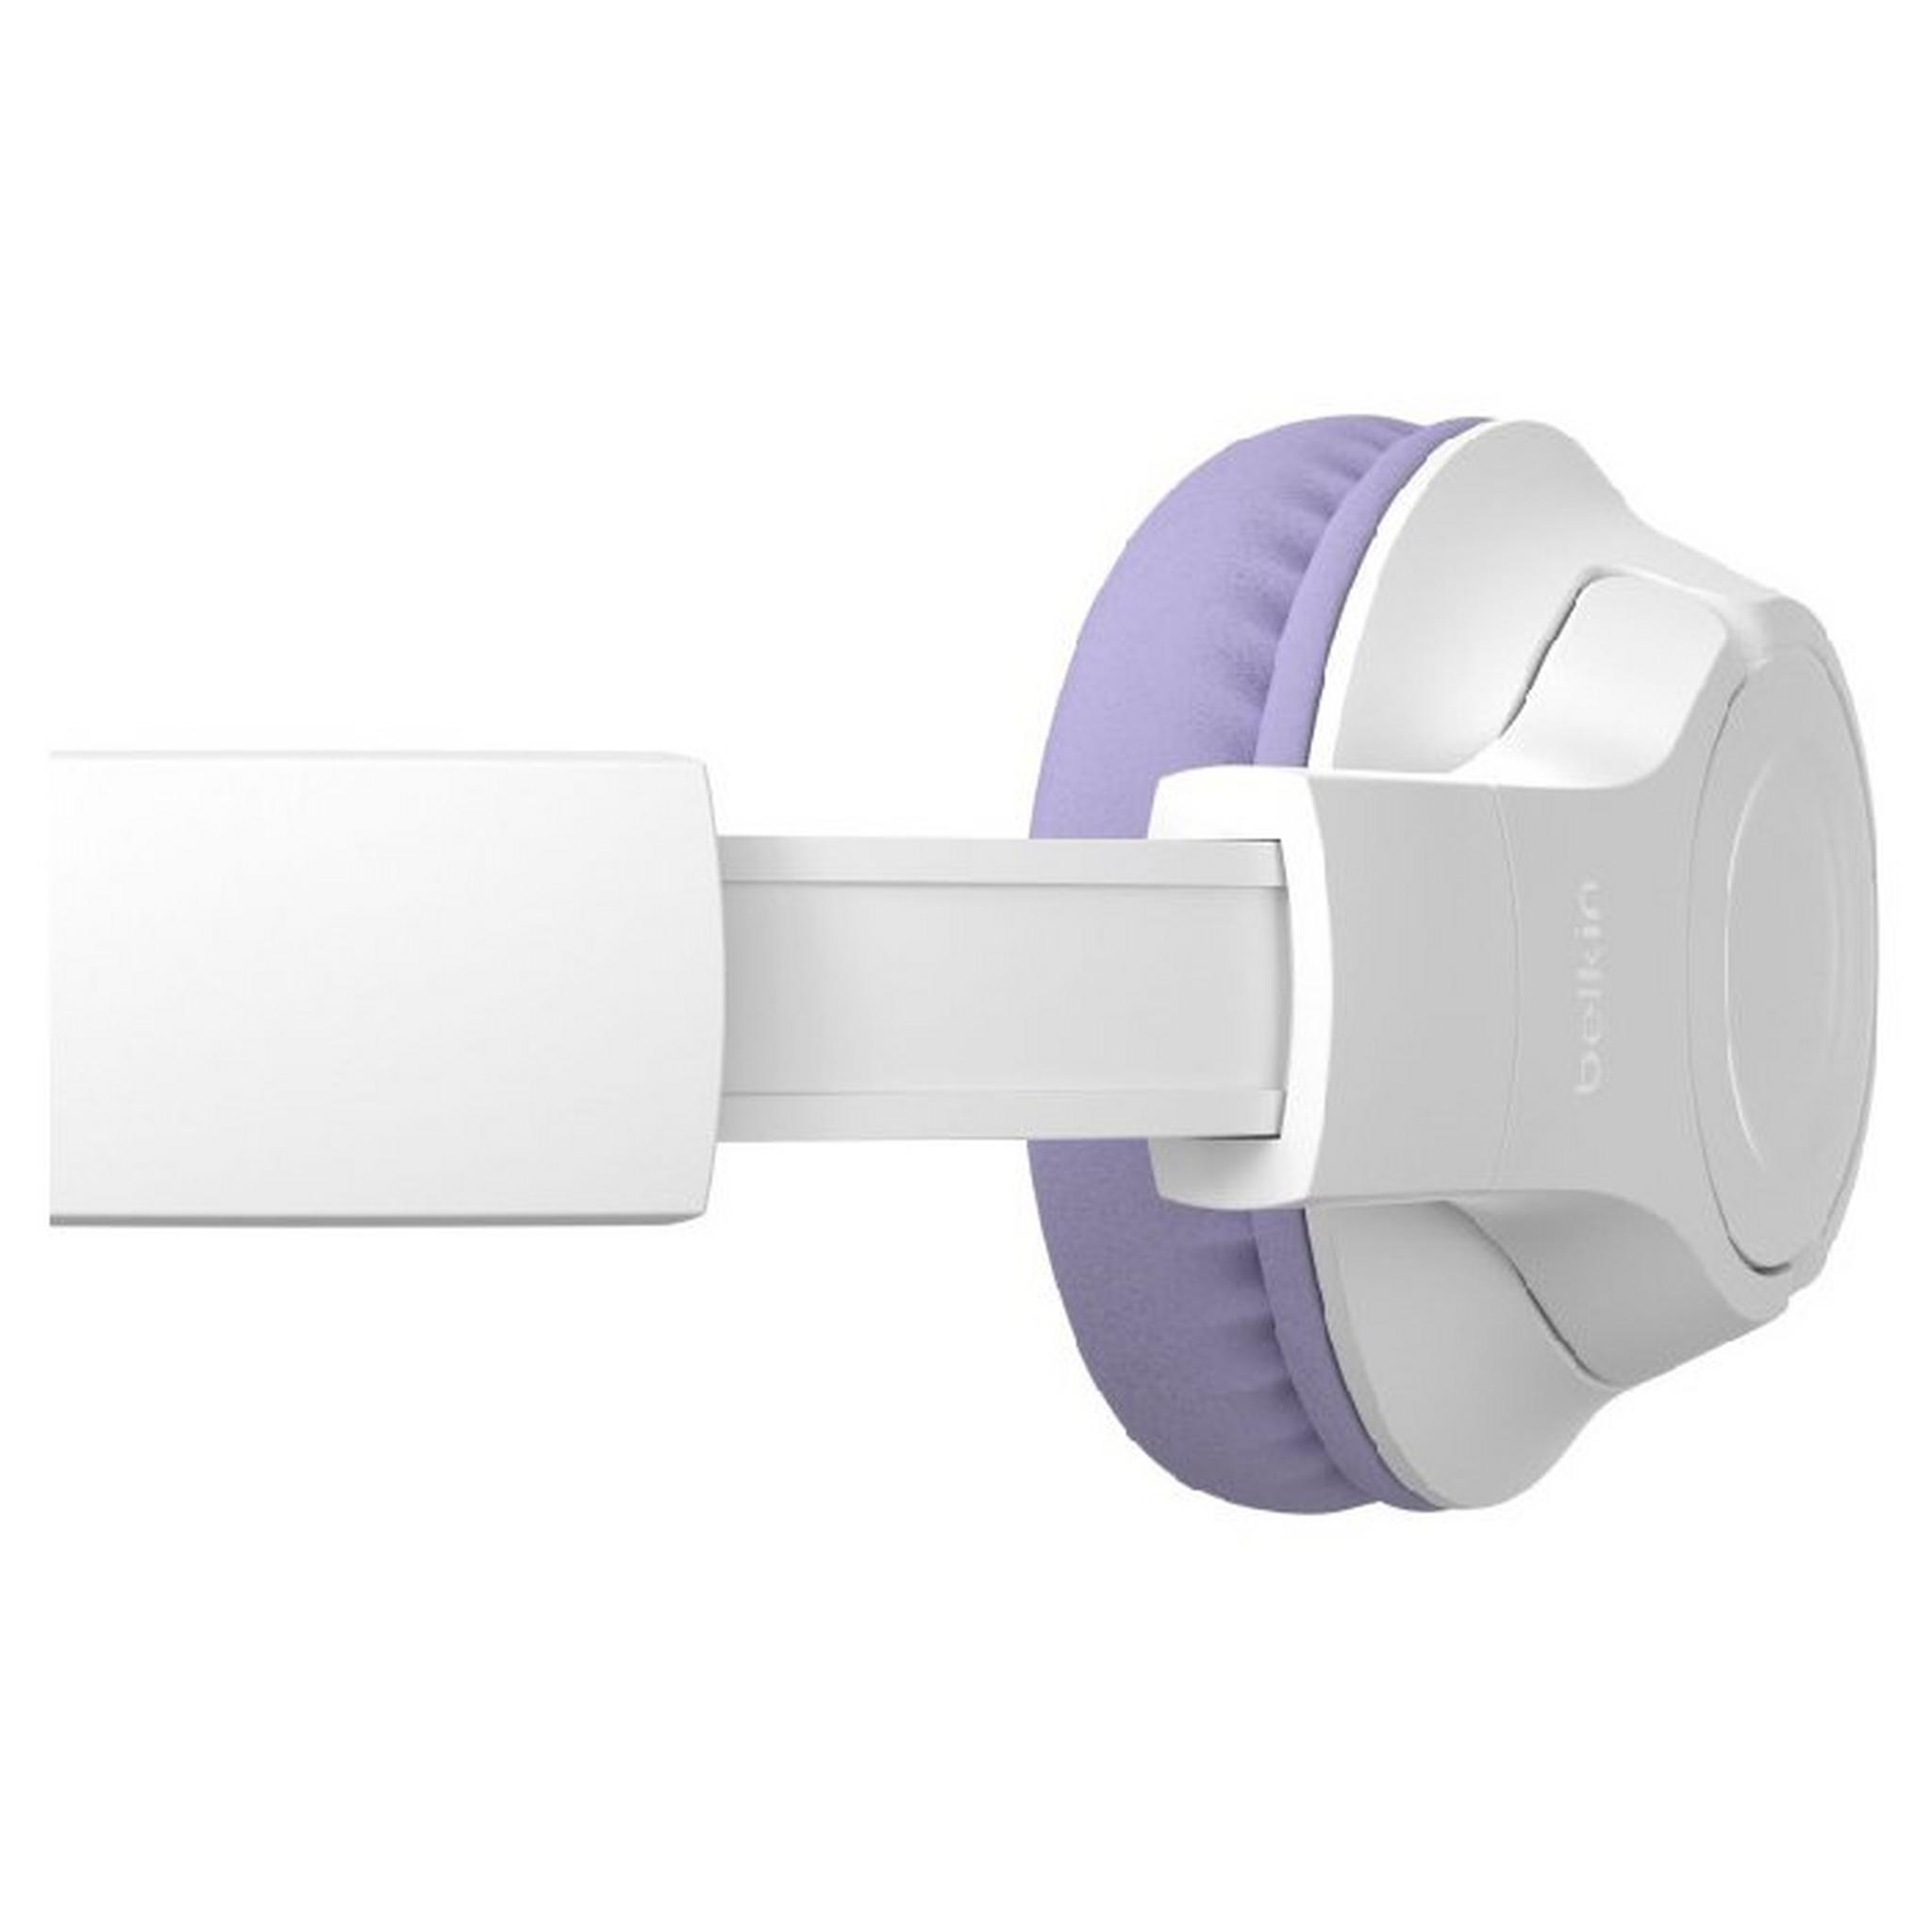 BELKIN SoundForm Inspire True Wireless Headset for Kids, Bluetooth, AUD006btLV – Lavender